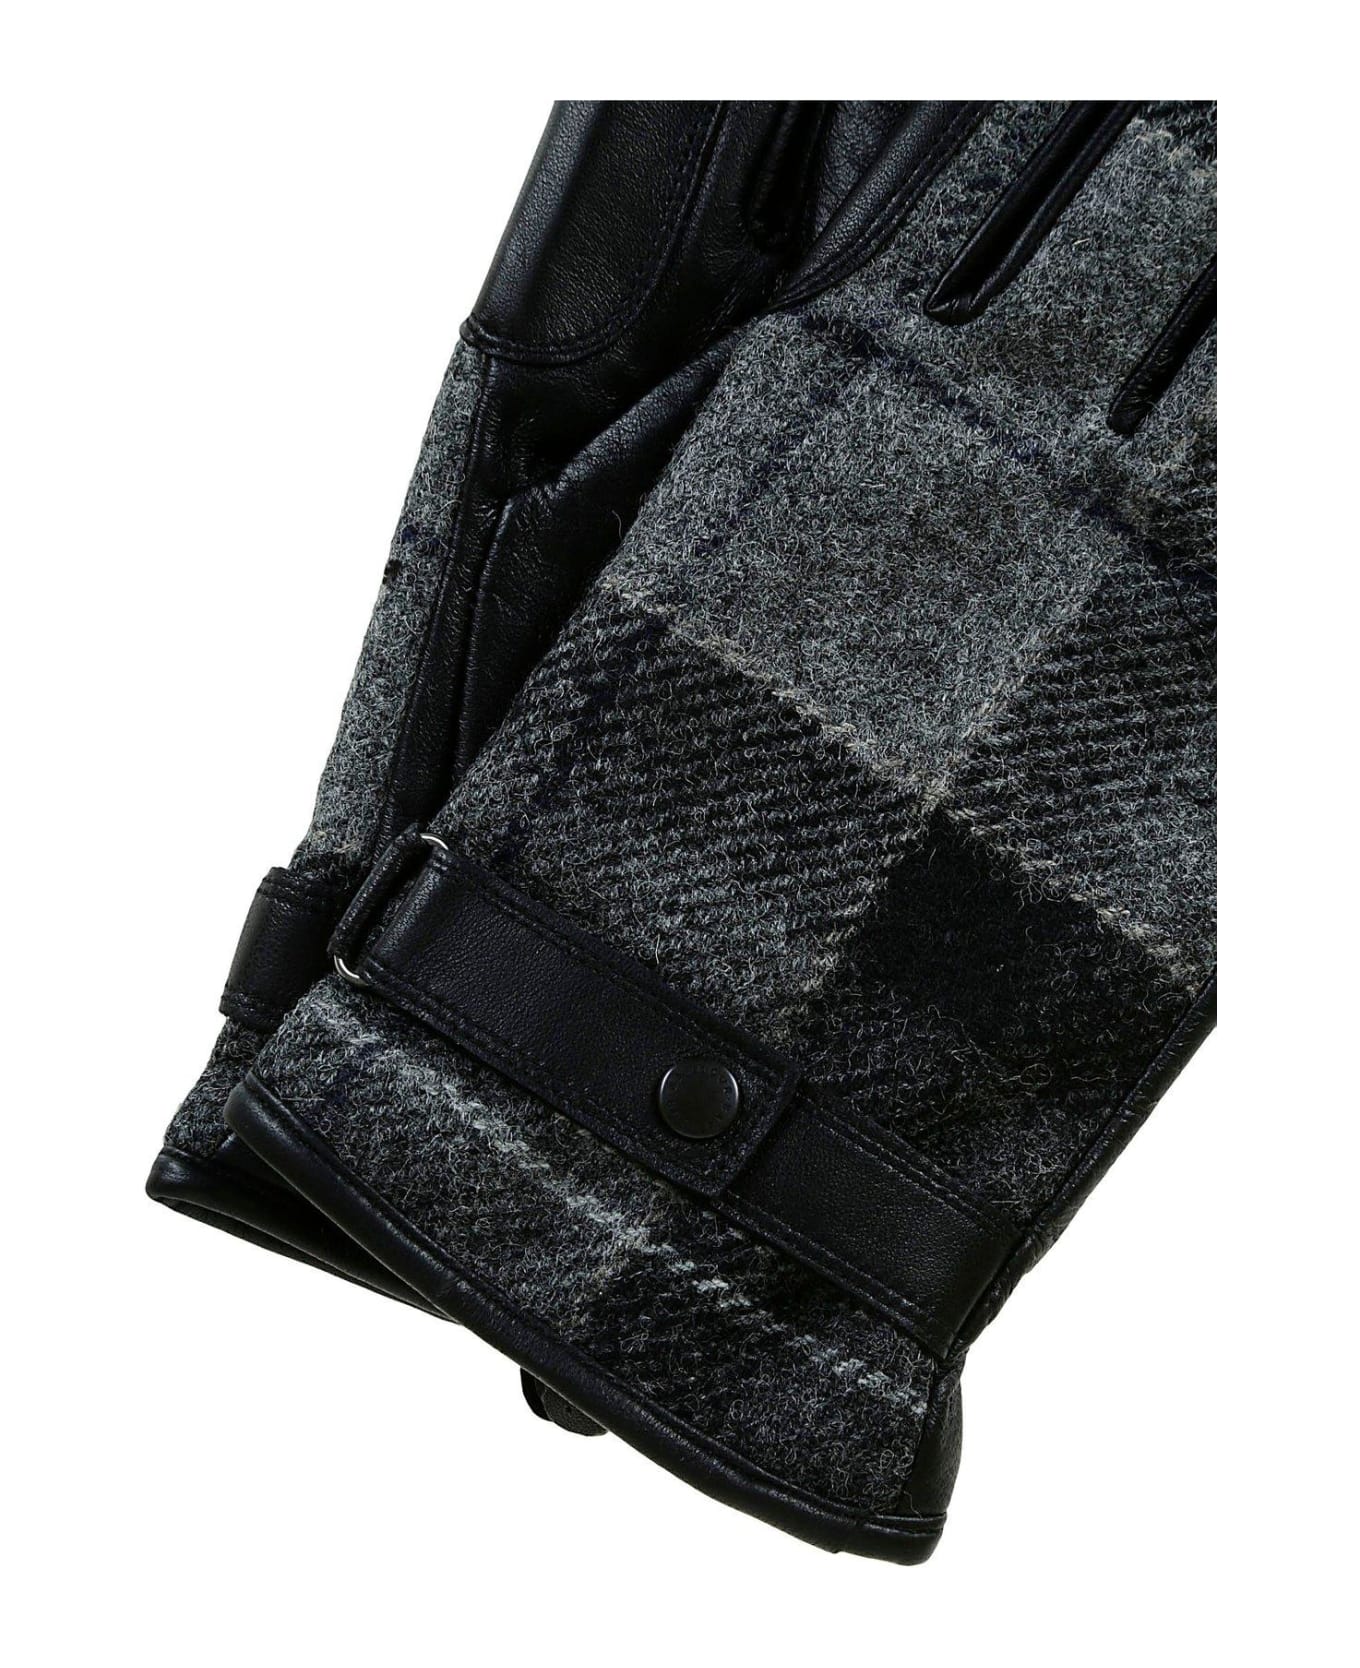 Barbour Newbrough Tartan Gloves - Black/grey